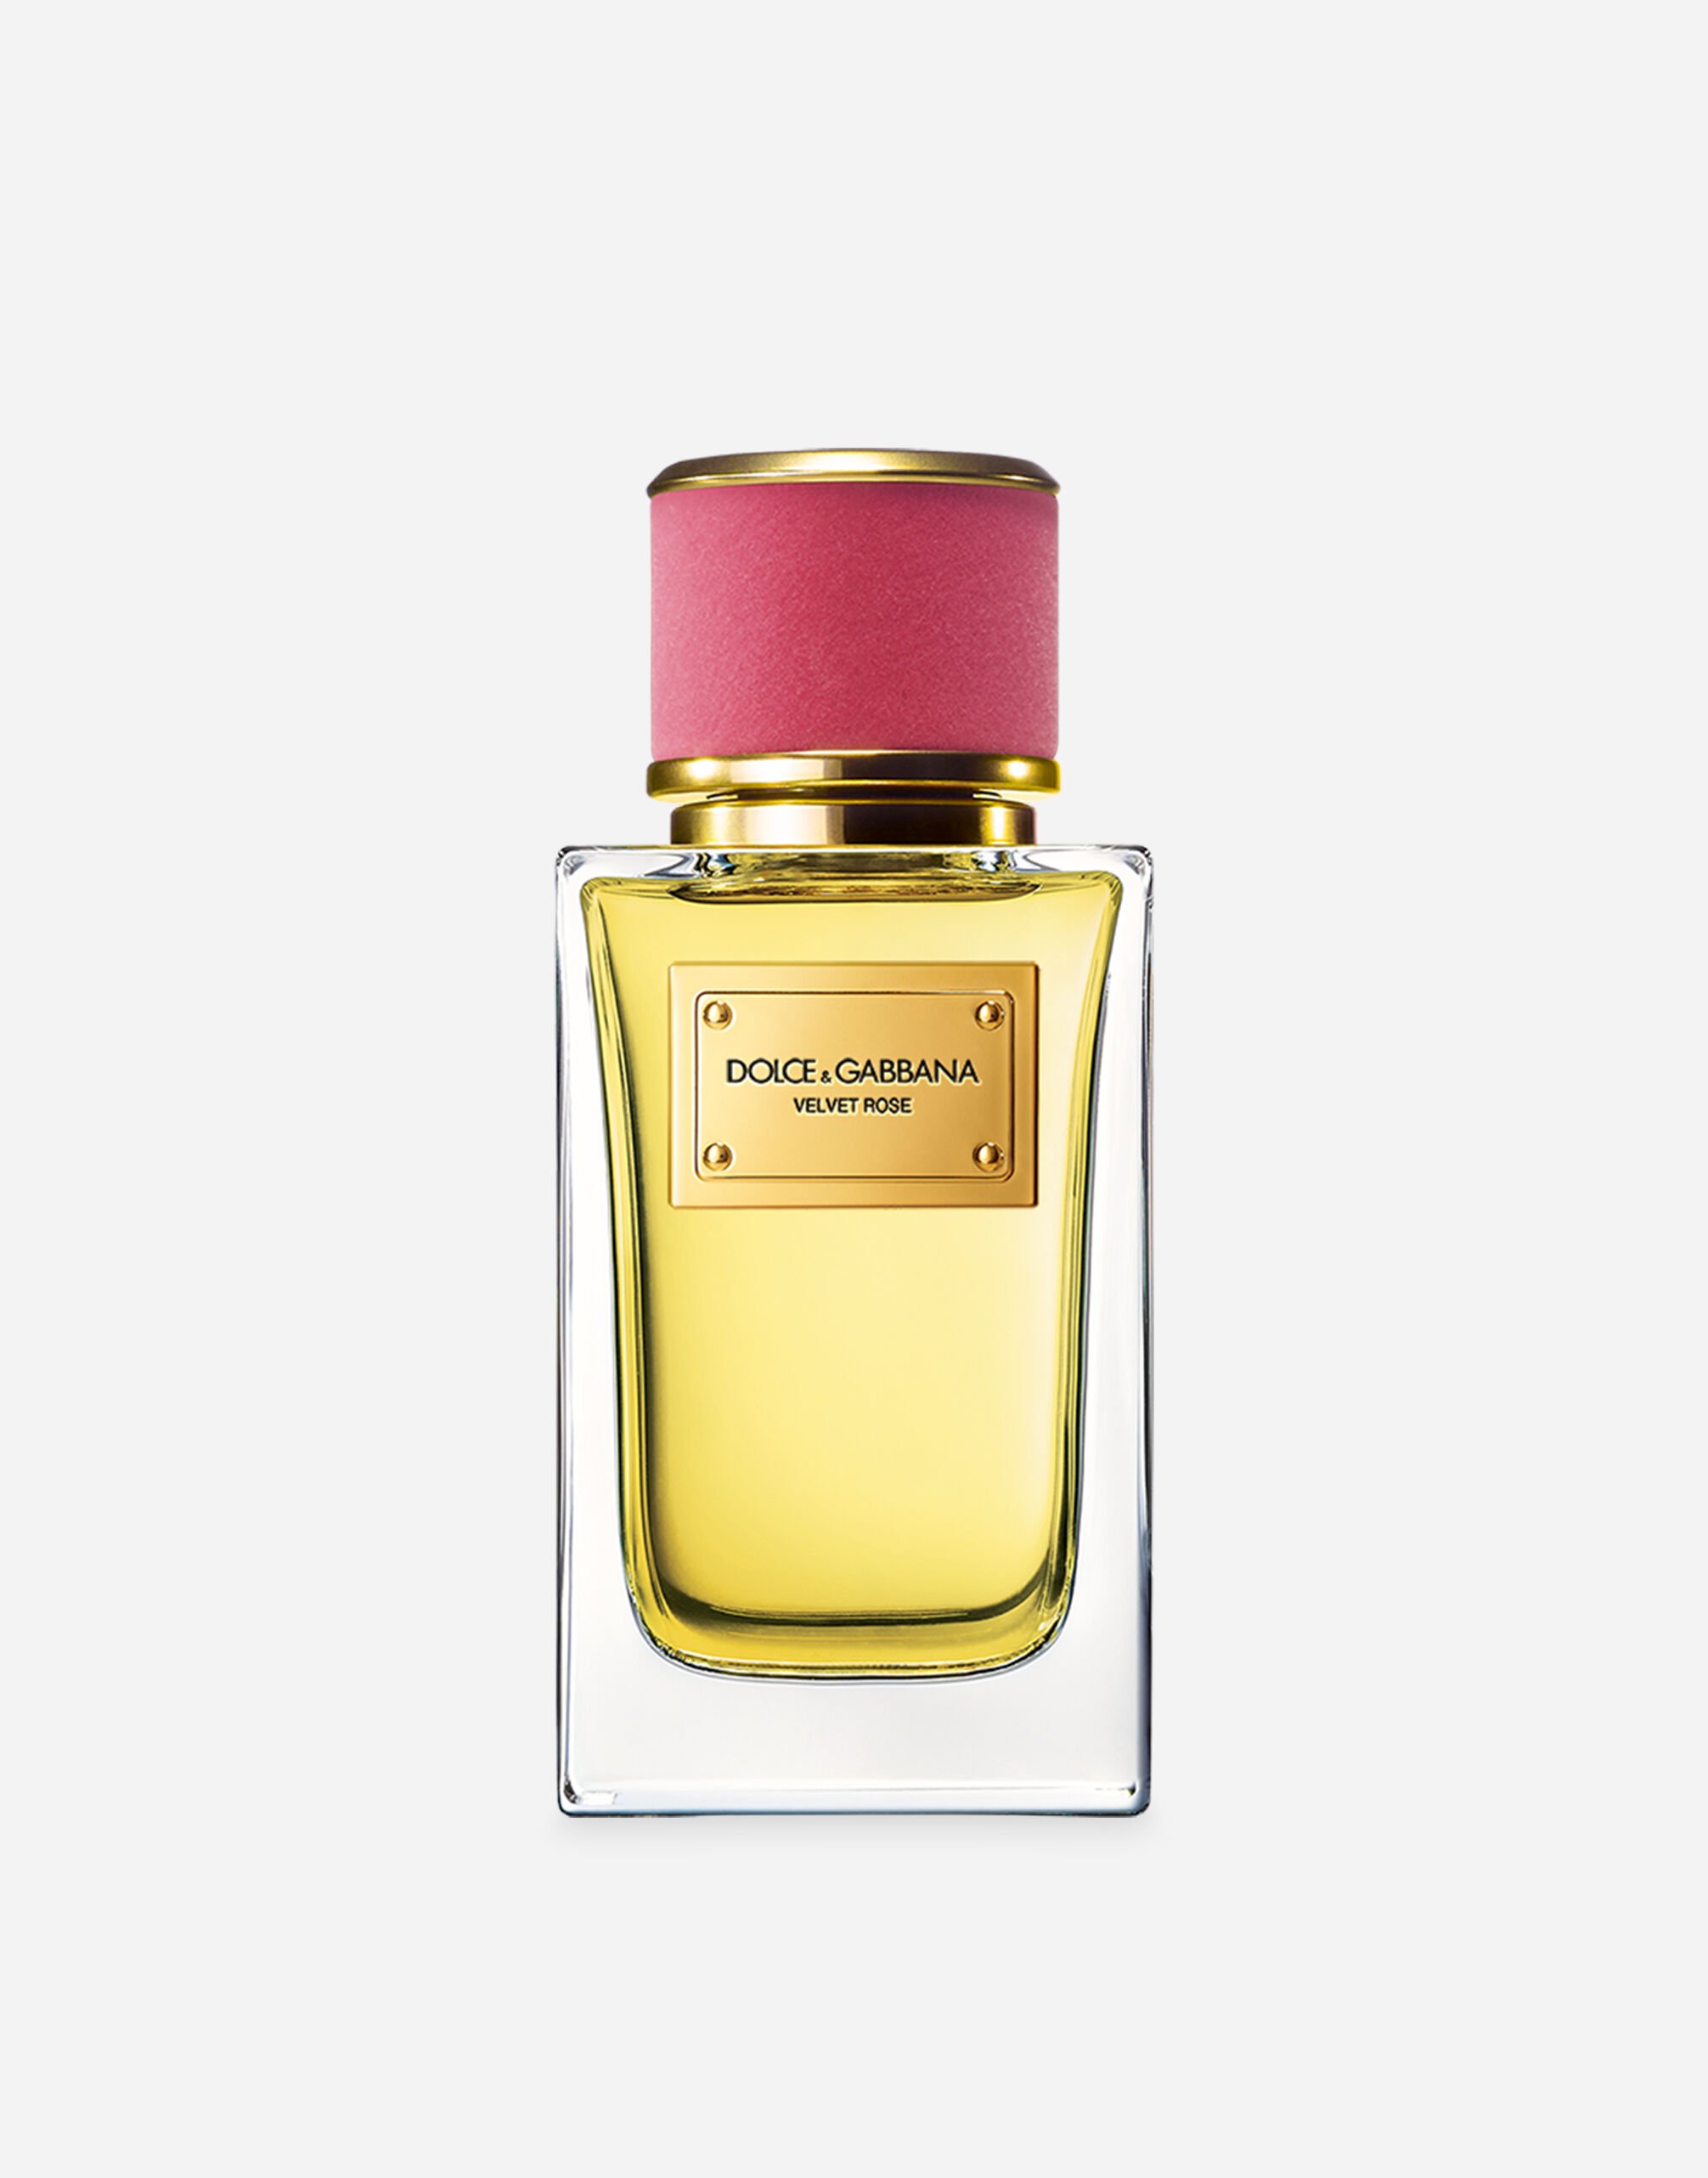 Dolce & Gabbana Velvet Rose Eau de Parfum - VT00KBVT000